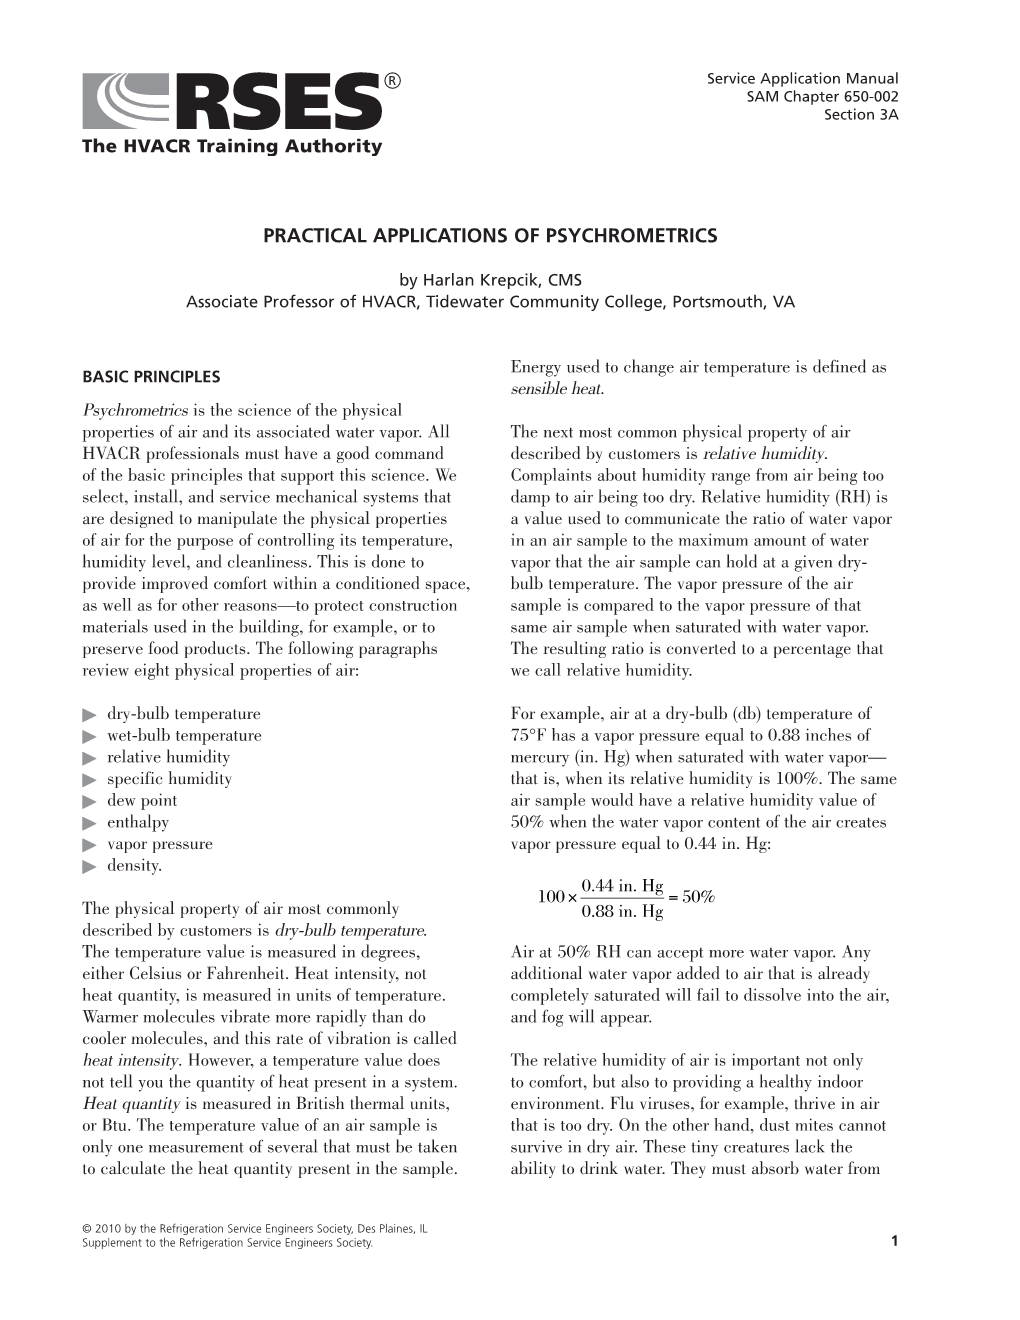 Practical Applications of Psychrometrics